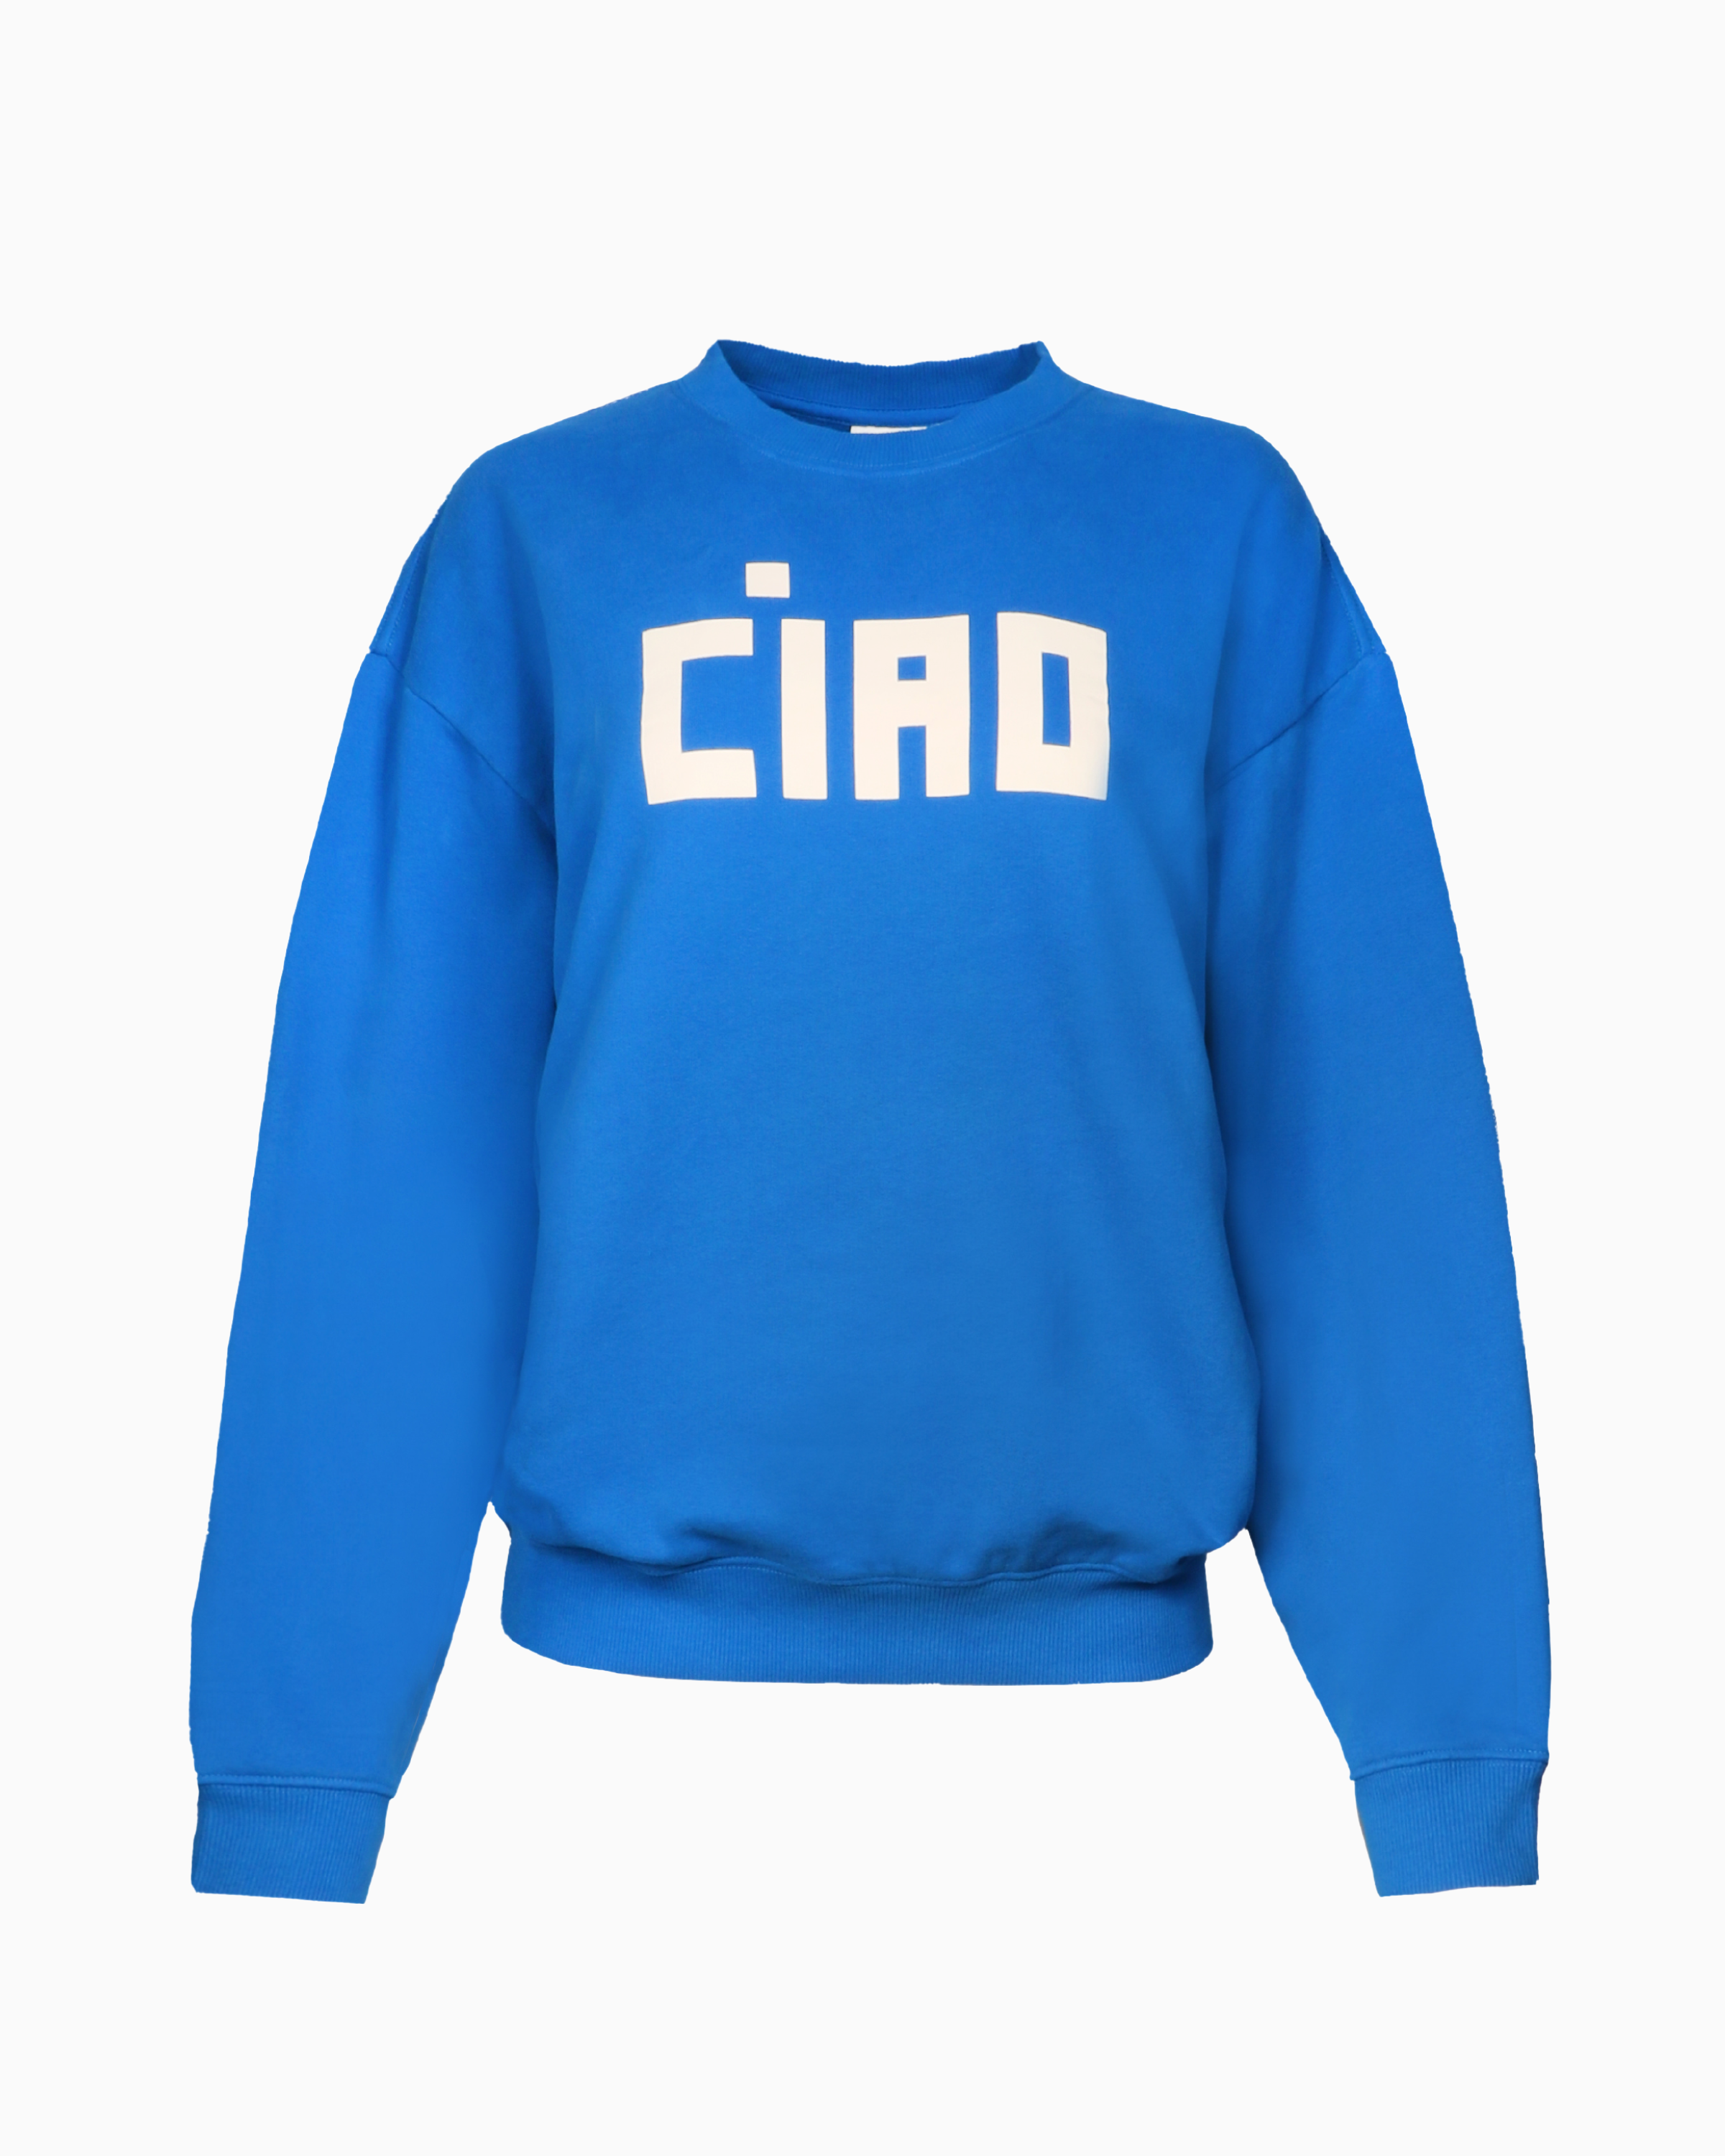 Clare V. Oversized Sweatshirt in Bright Cobalt & Cream Block Ciao